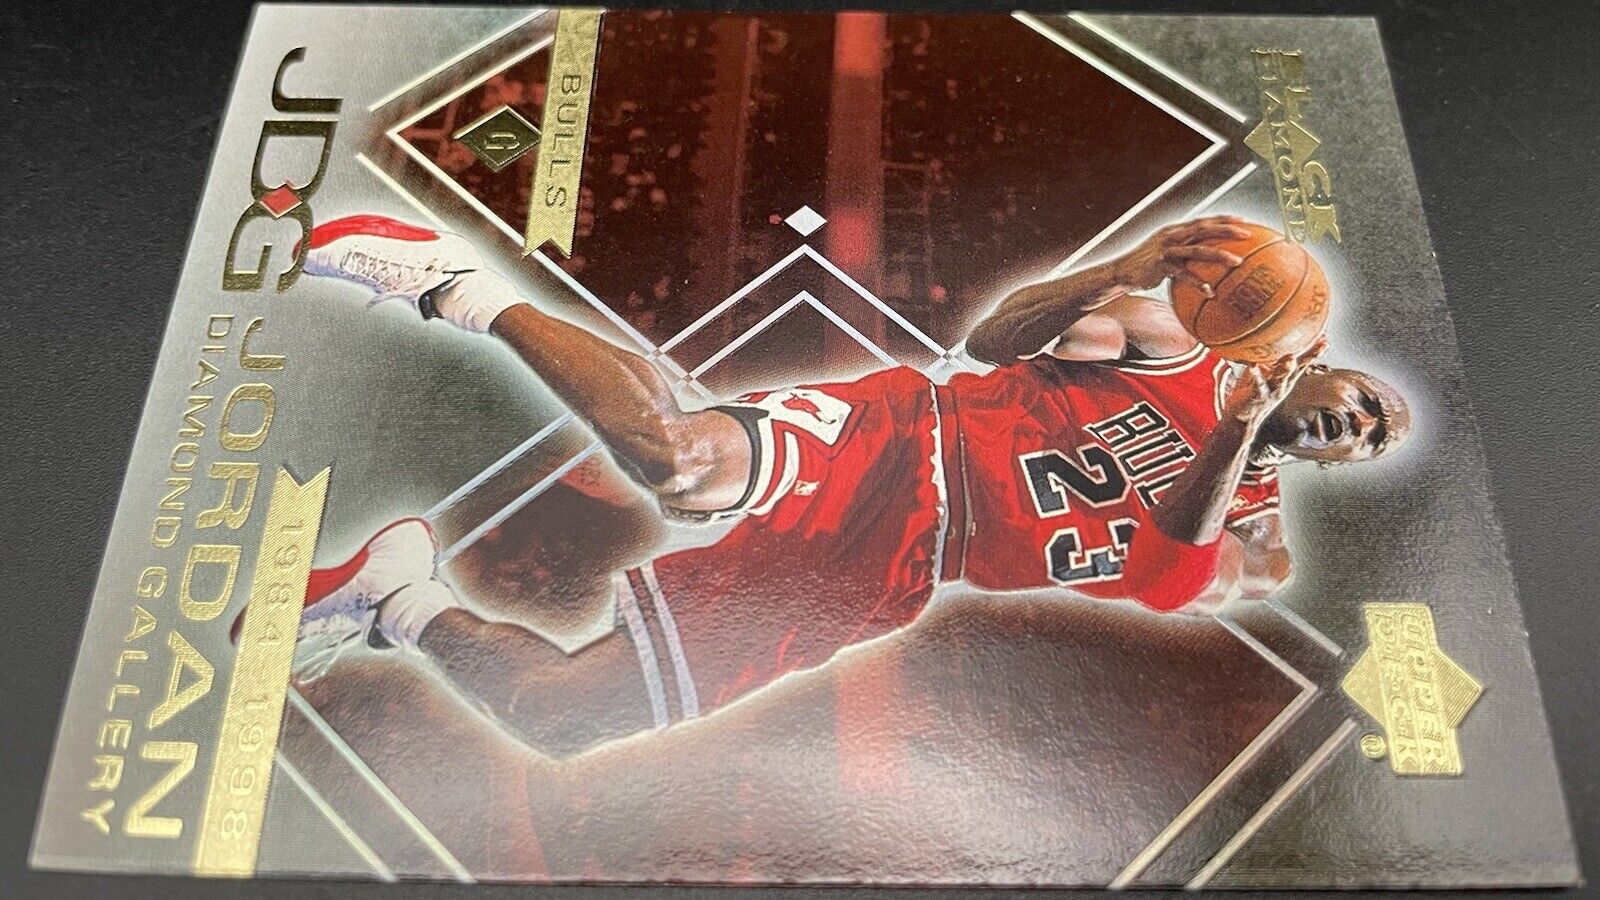 Michael Jordan 2000 Upper Deck Black Diamond #DG6 Chicago Bulls Diamond Gallery